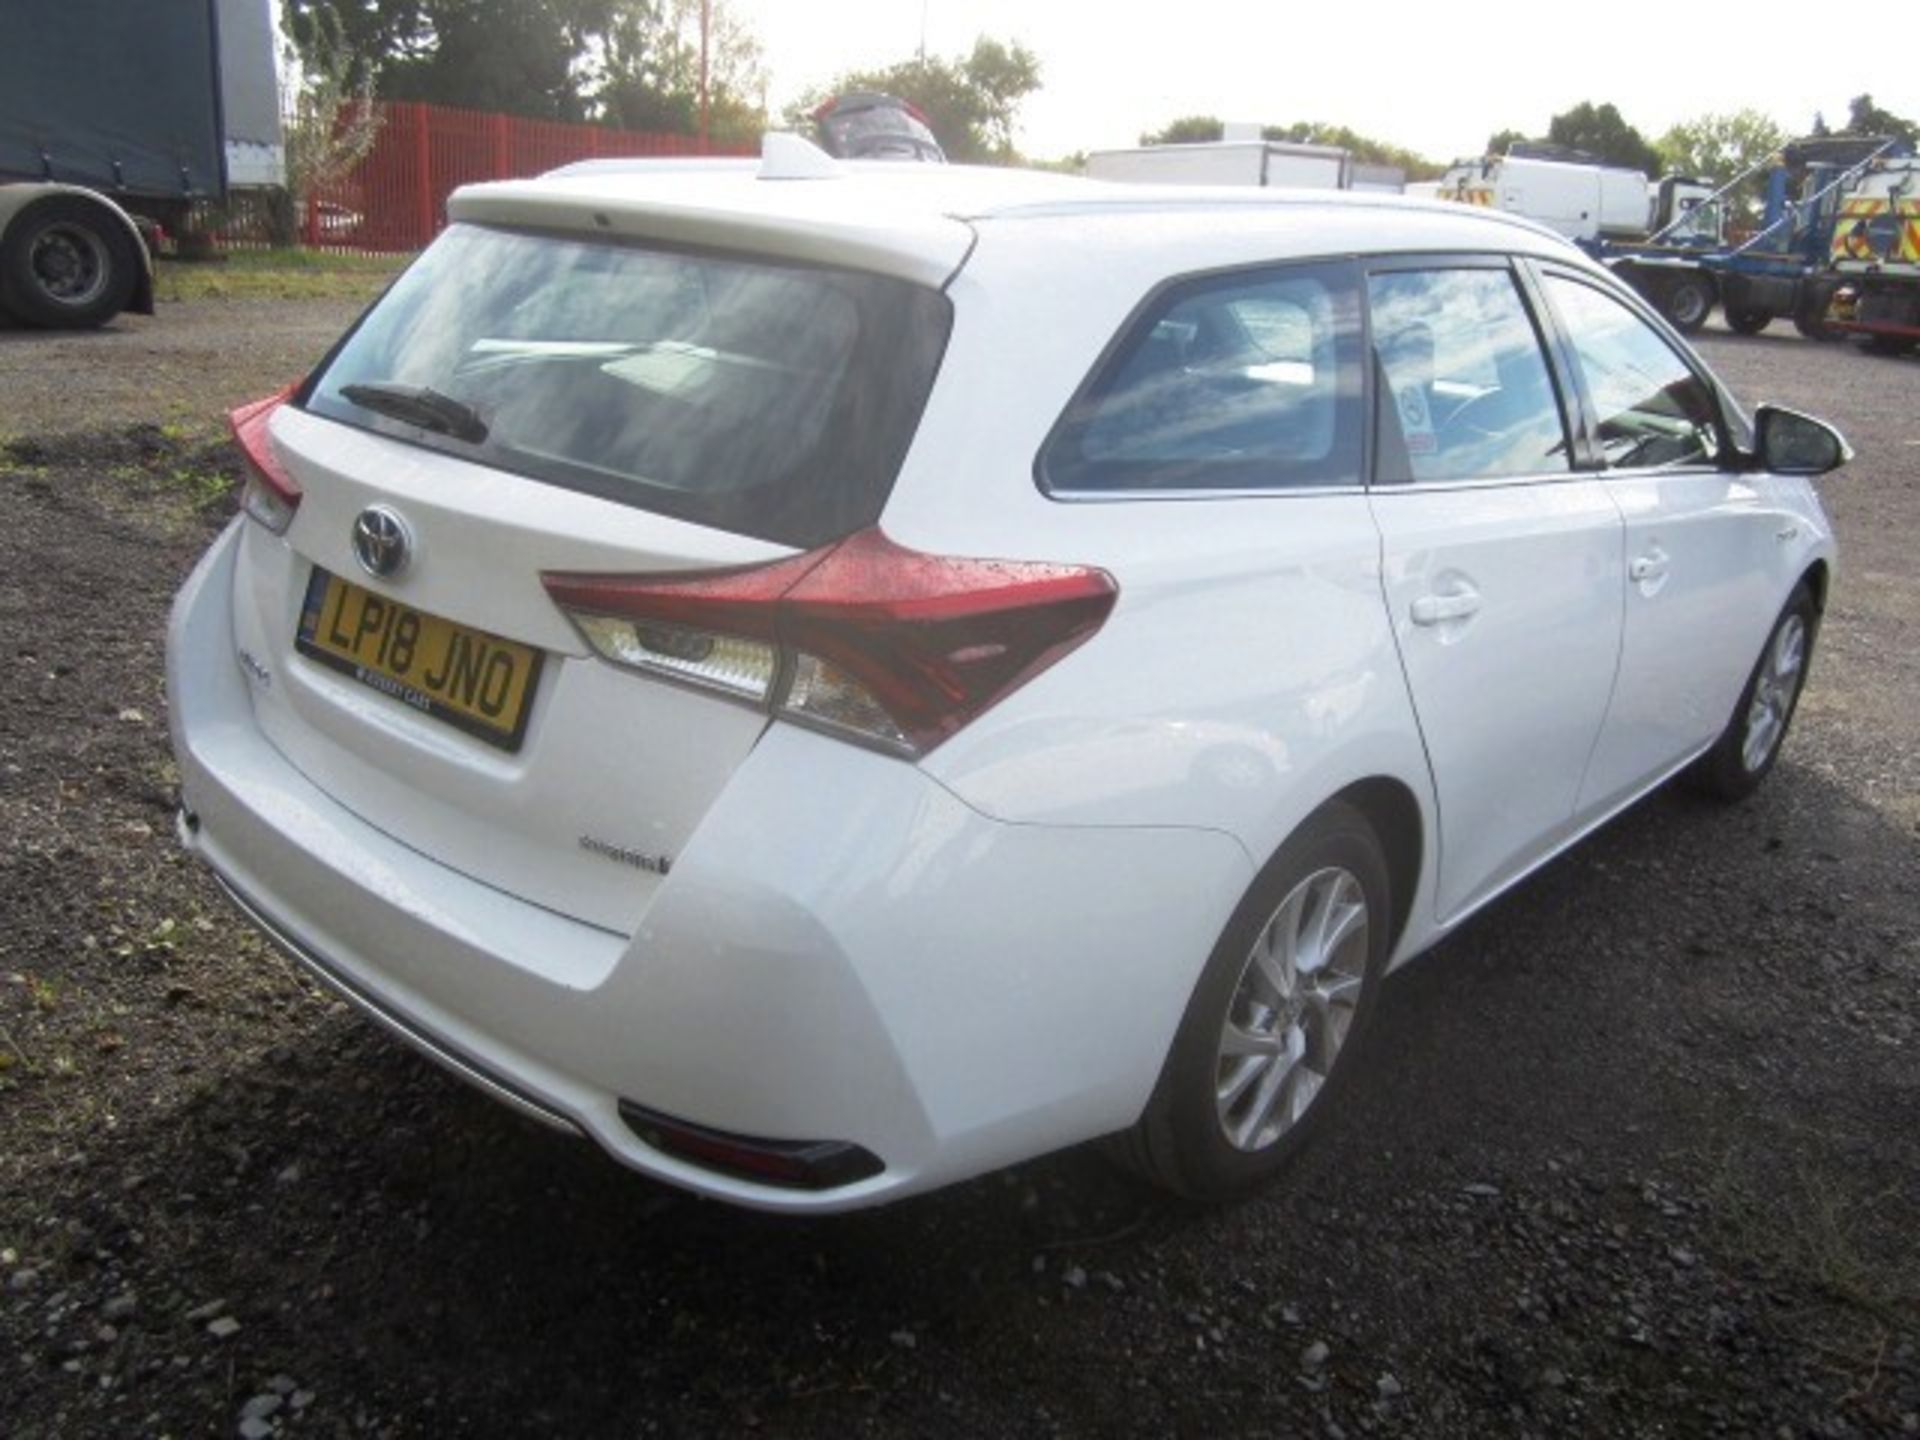 Toyota Auris ICON HEV VVT-I CVT 1.8 hybrid estate. Registration: LP18 JNO. Recorded mileage: 45,284. - Image 5 of 21